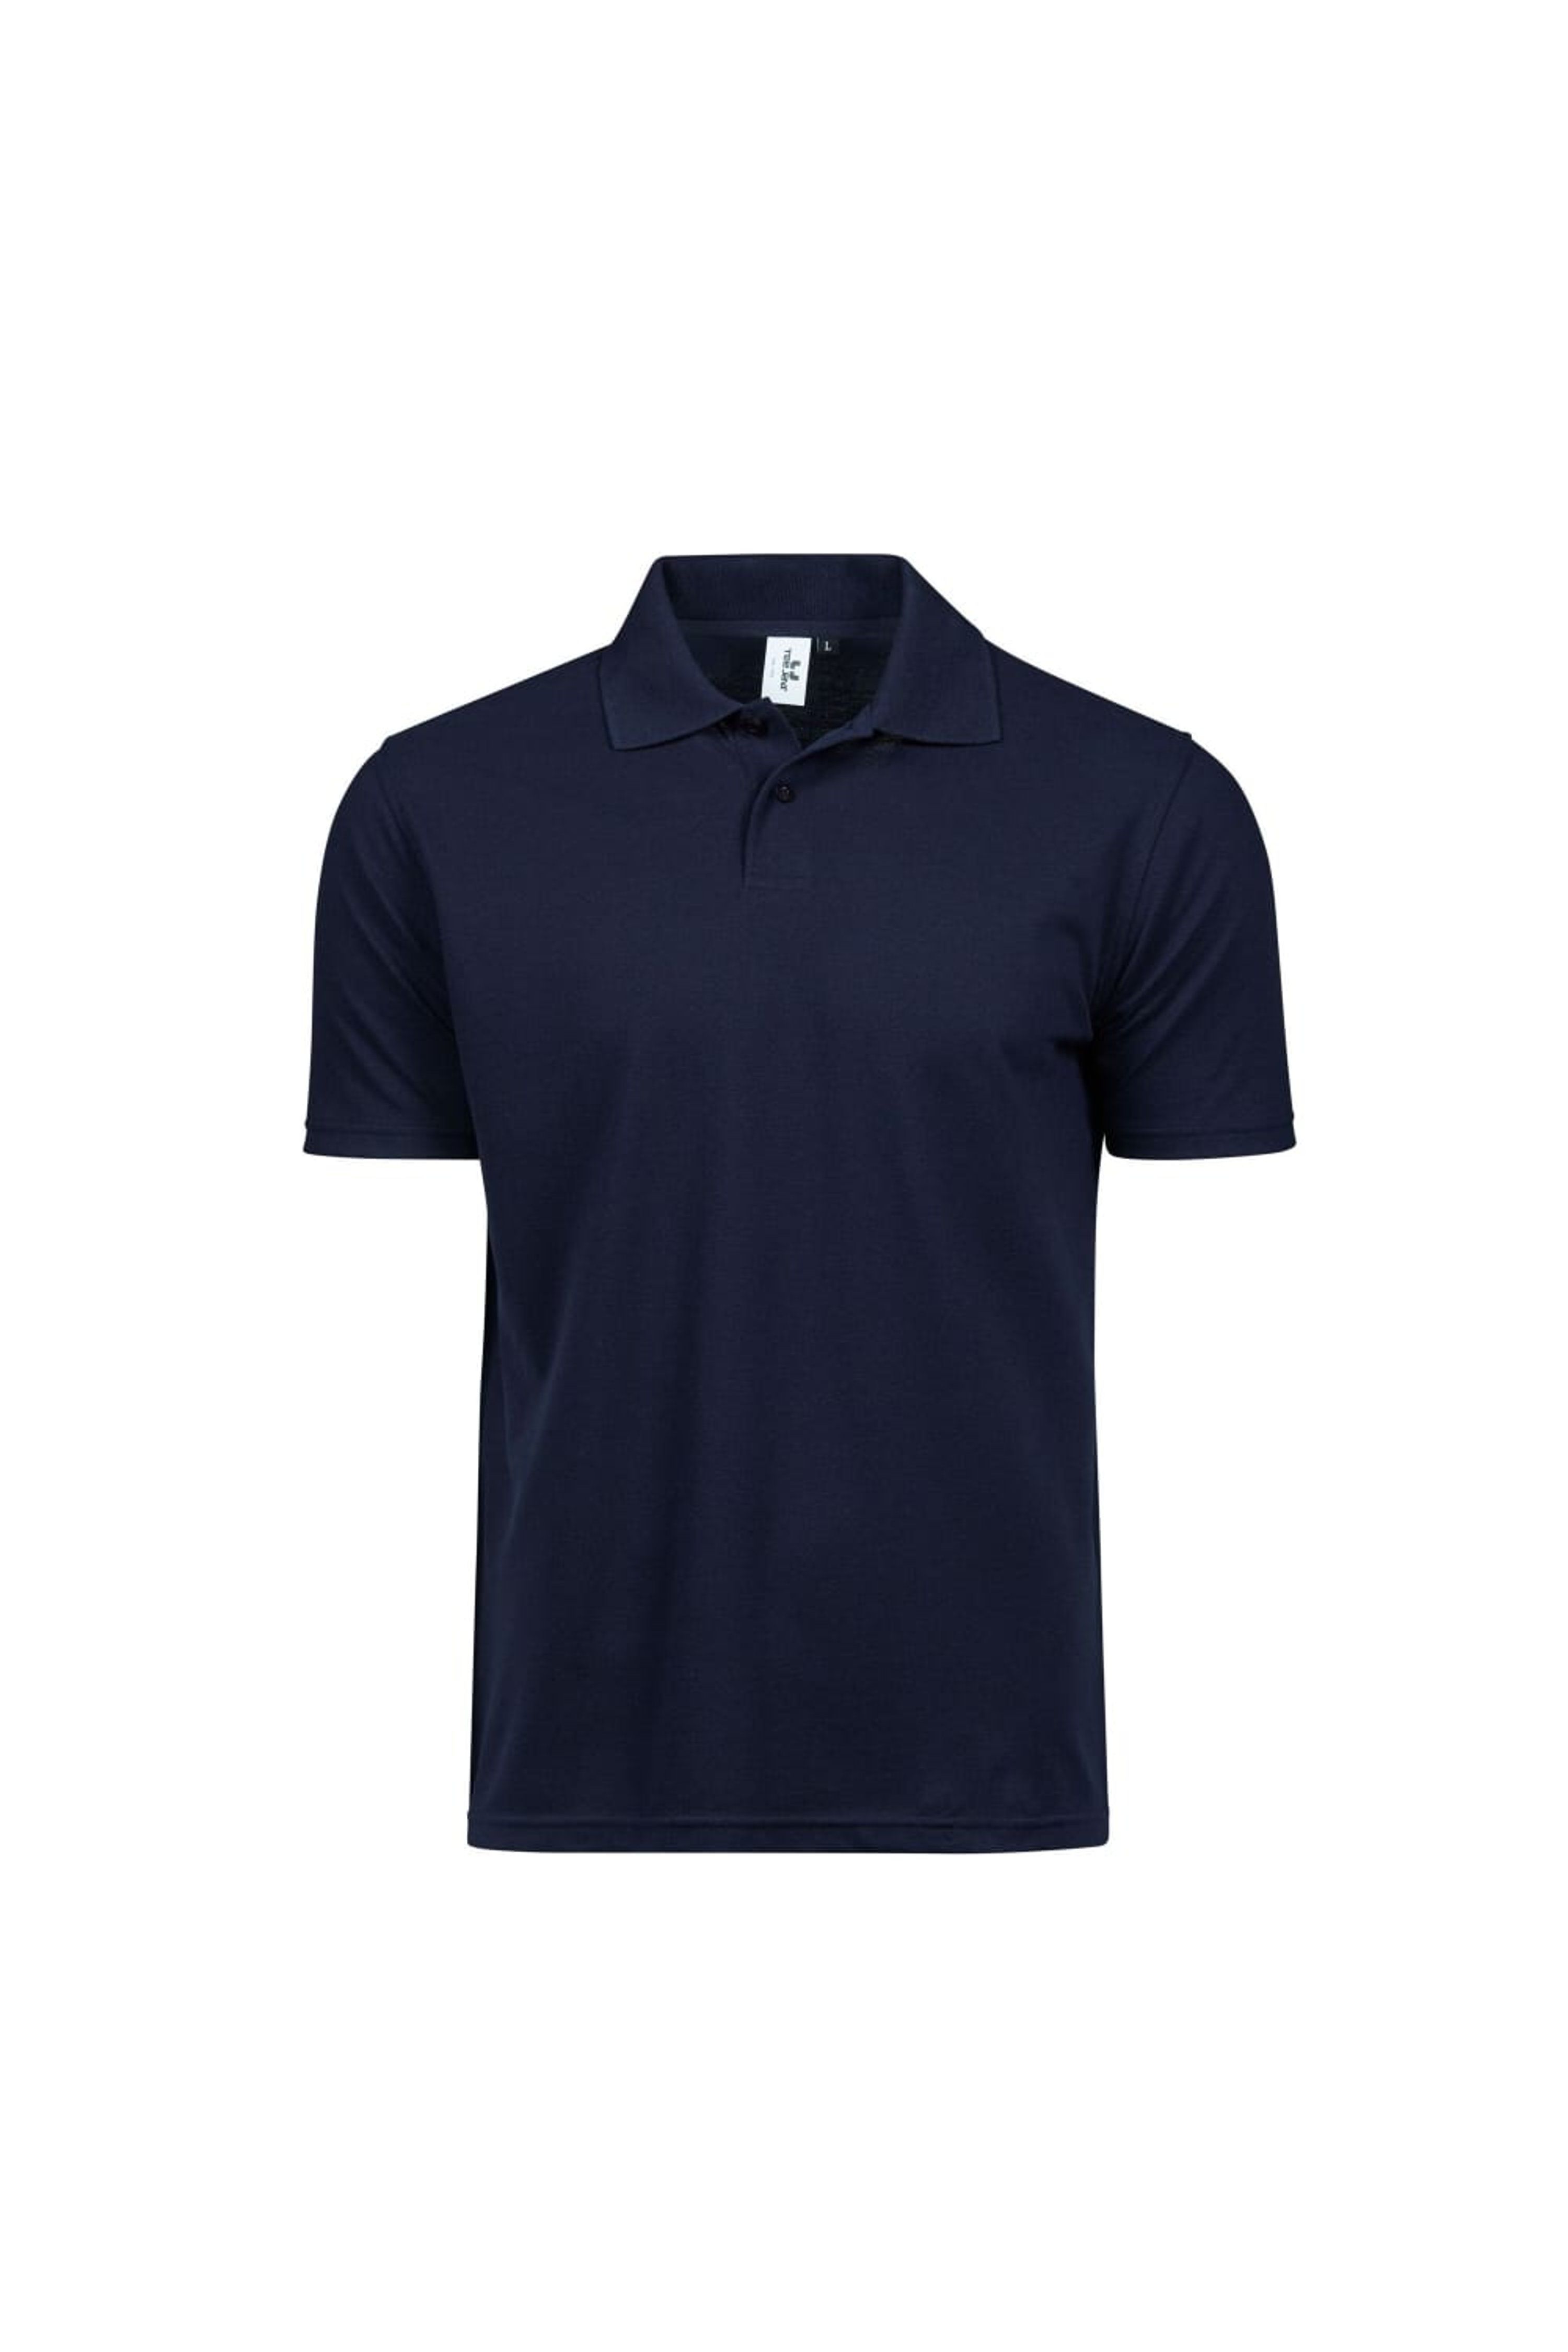 Tee Jays Mens Power Polo Shirt (Navy Blue) - 5XL - Also in: XS, XL, M, L, XXL, 4XL, S, 3XL | Verishop